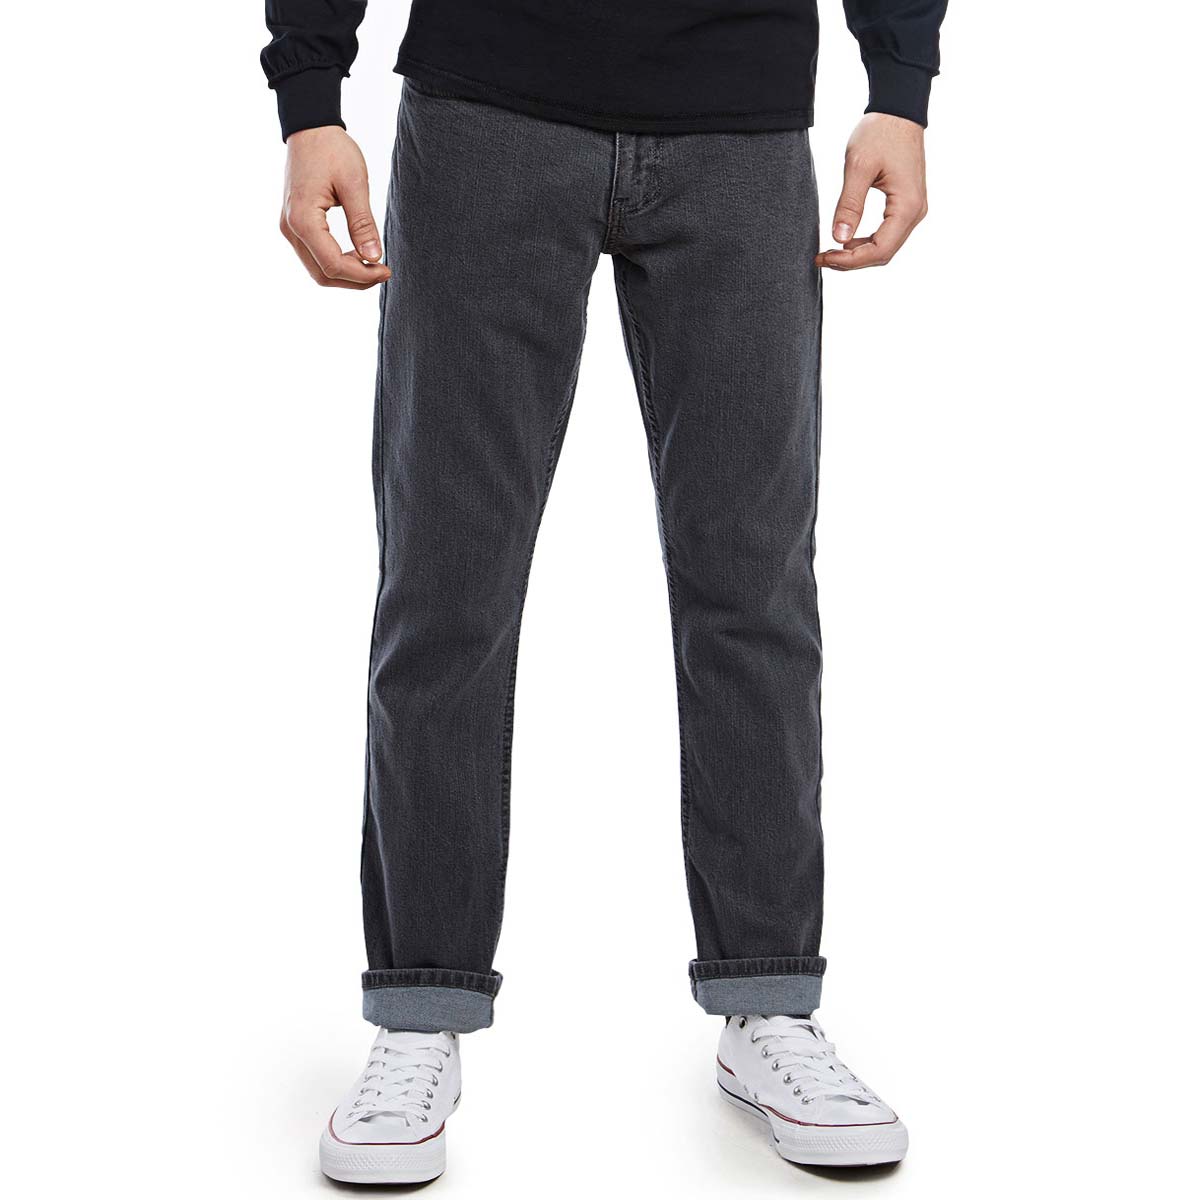 CCS Slim Fit Jeans - Grey image 1